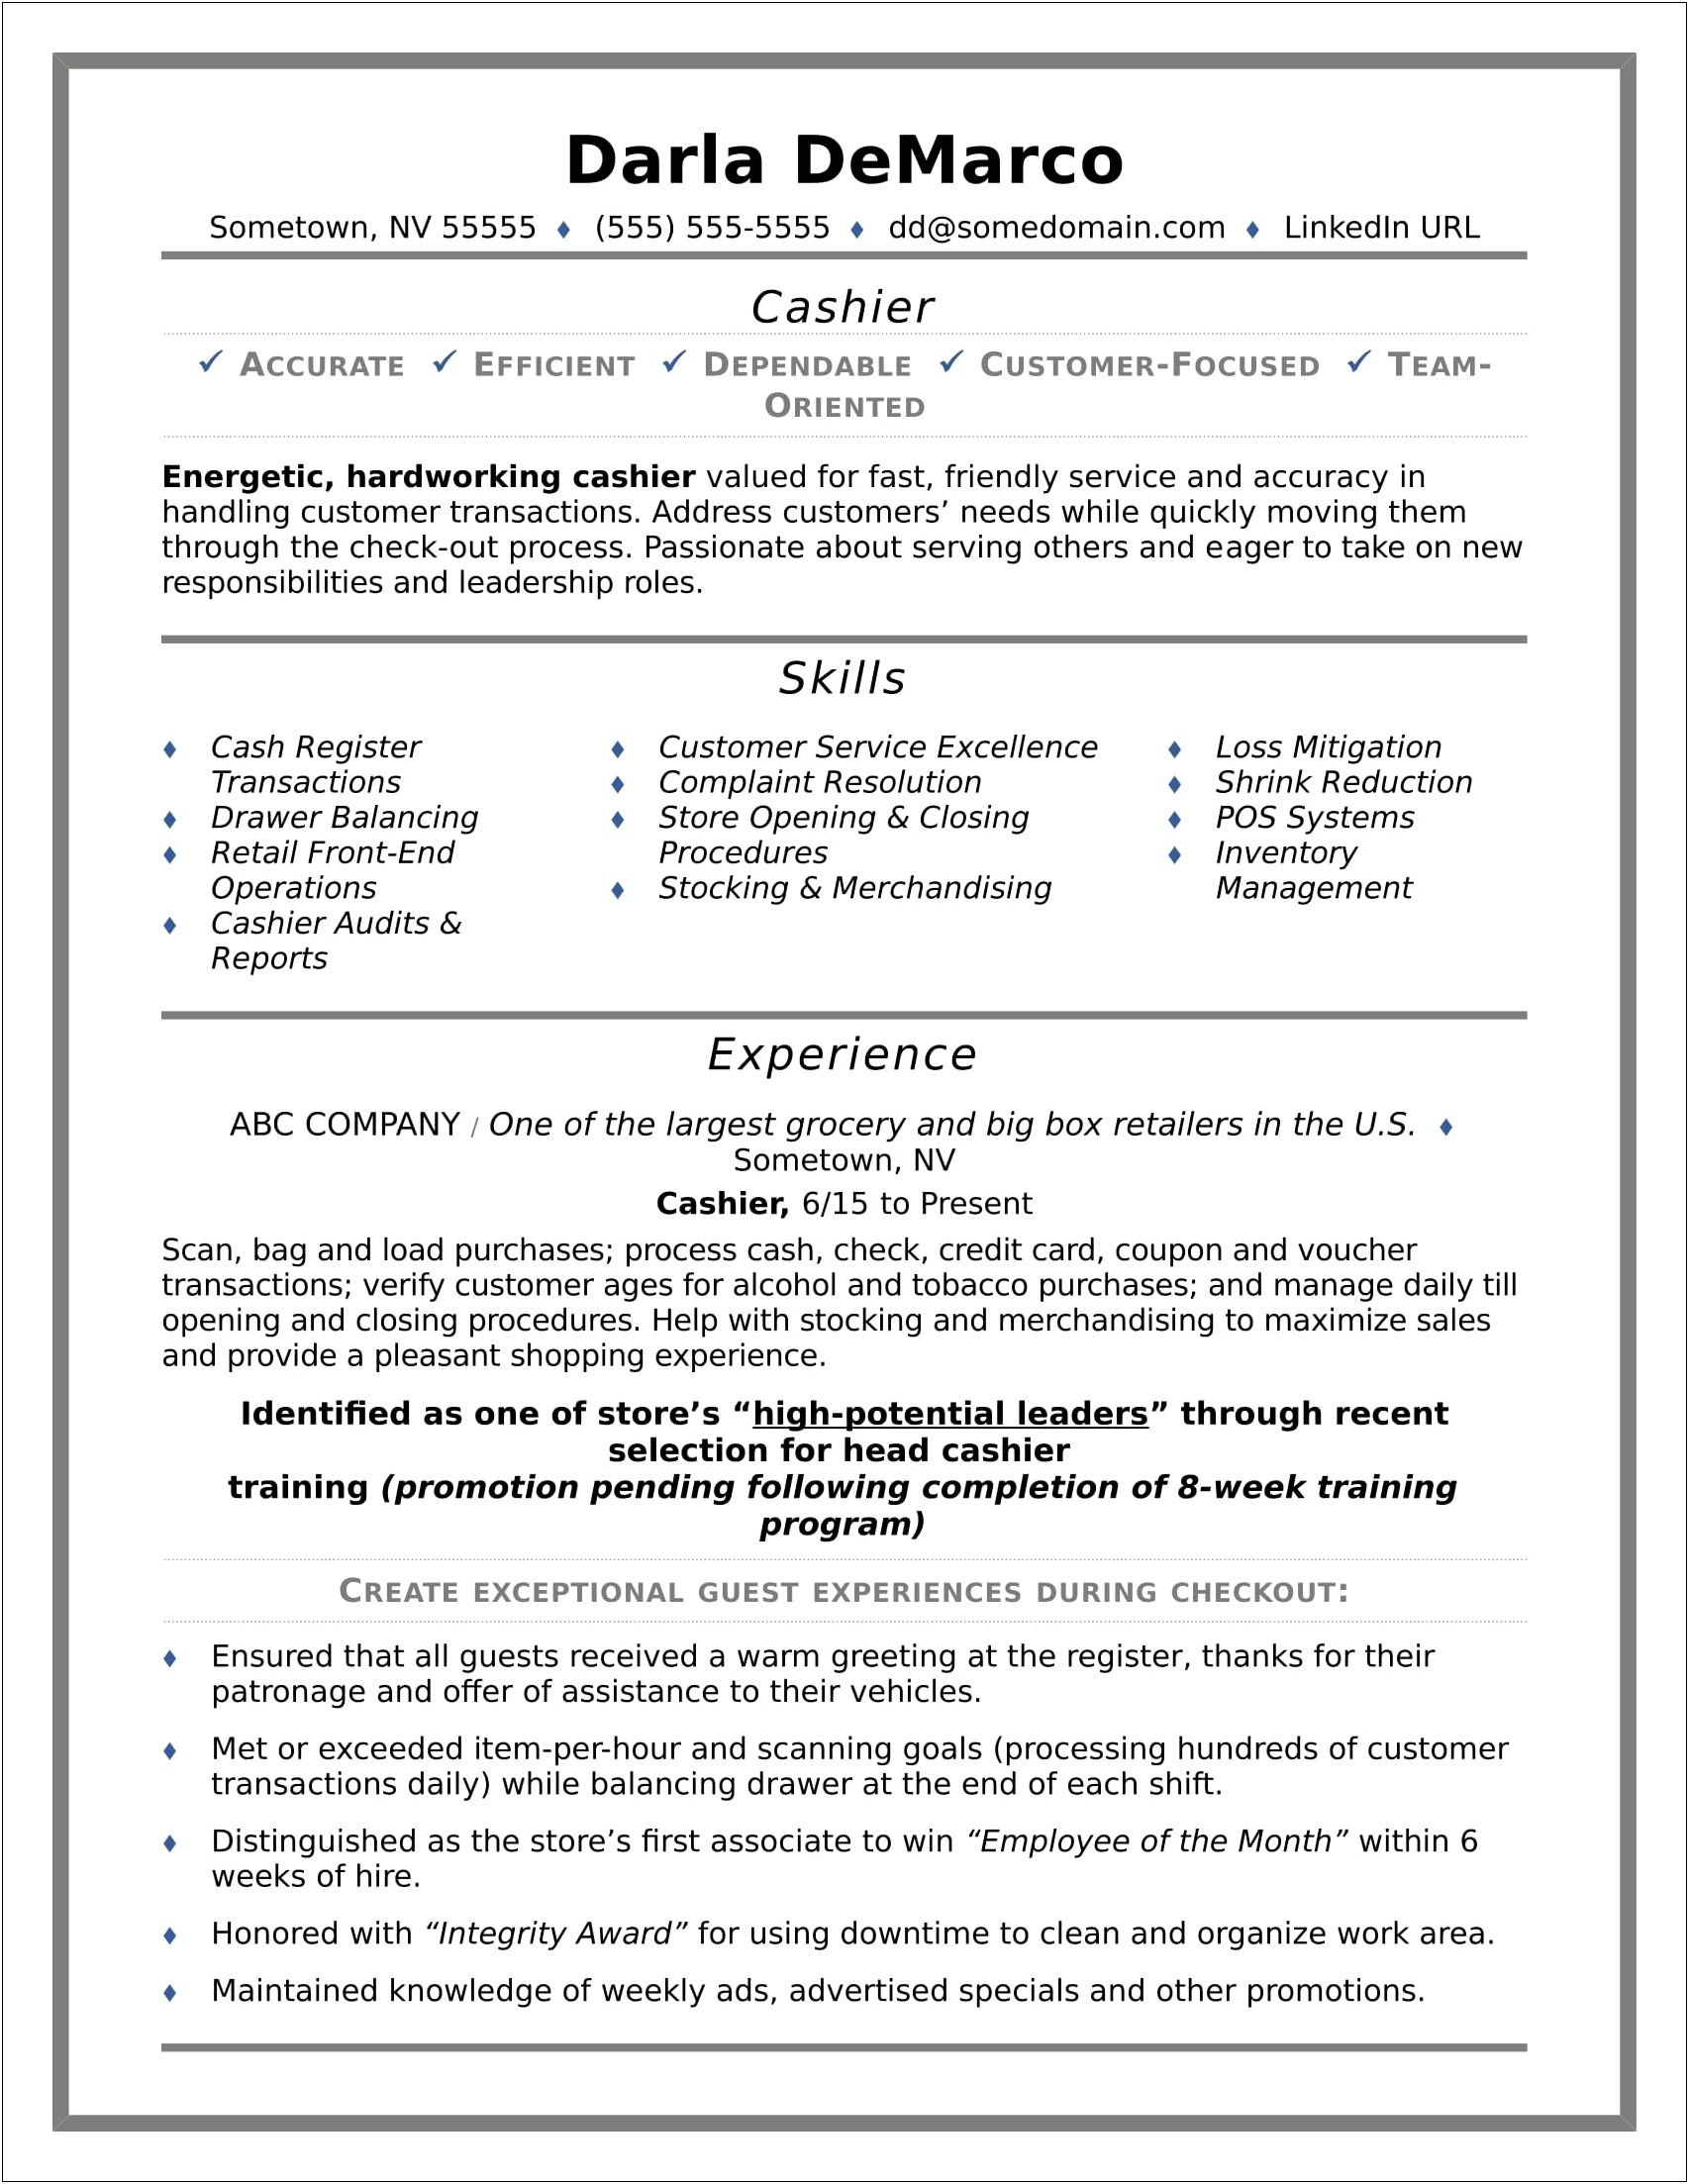 Description Cashier Job On Resume